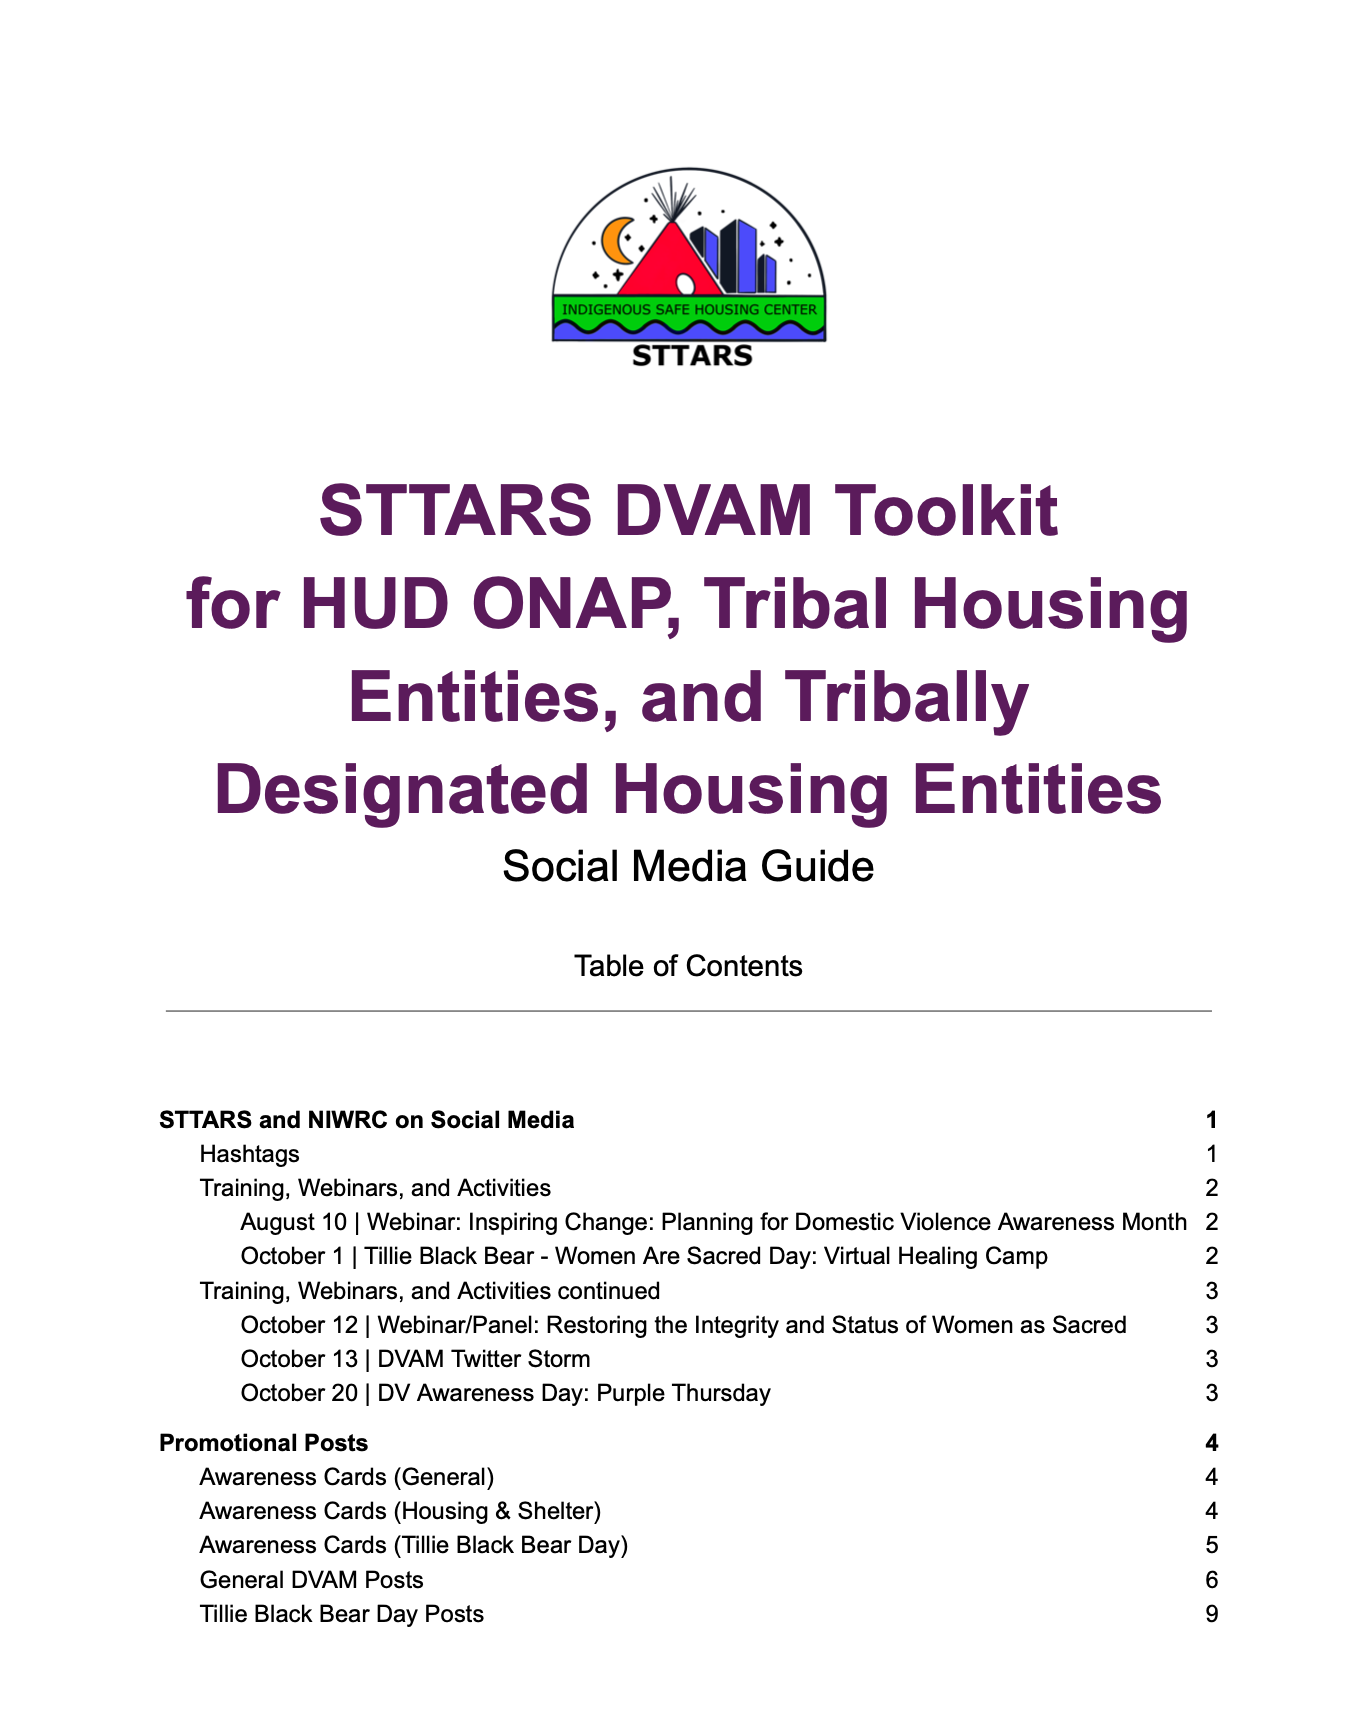 STTARS DVAM Toolkit for HUD ONAP, Tribal Housing Entities and Tribally Designated Housing Entities